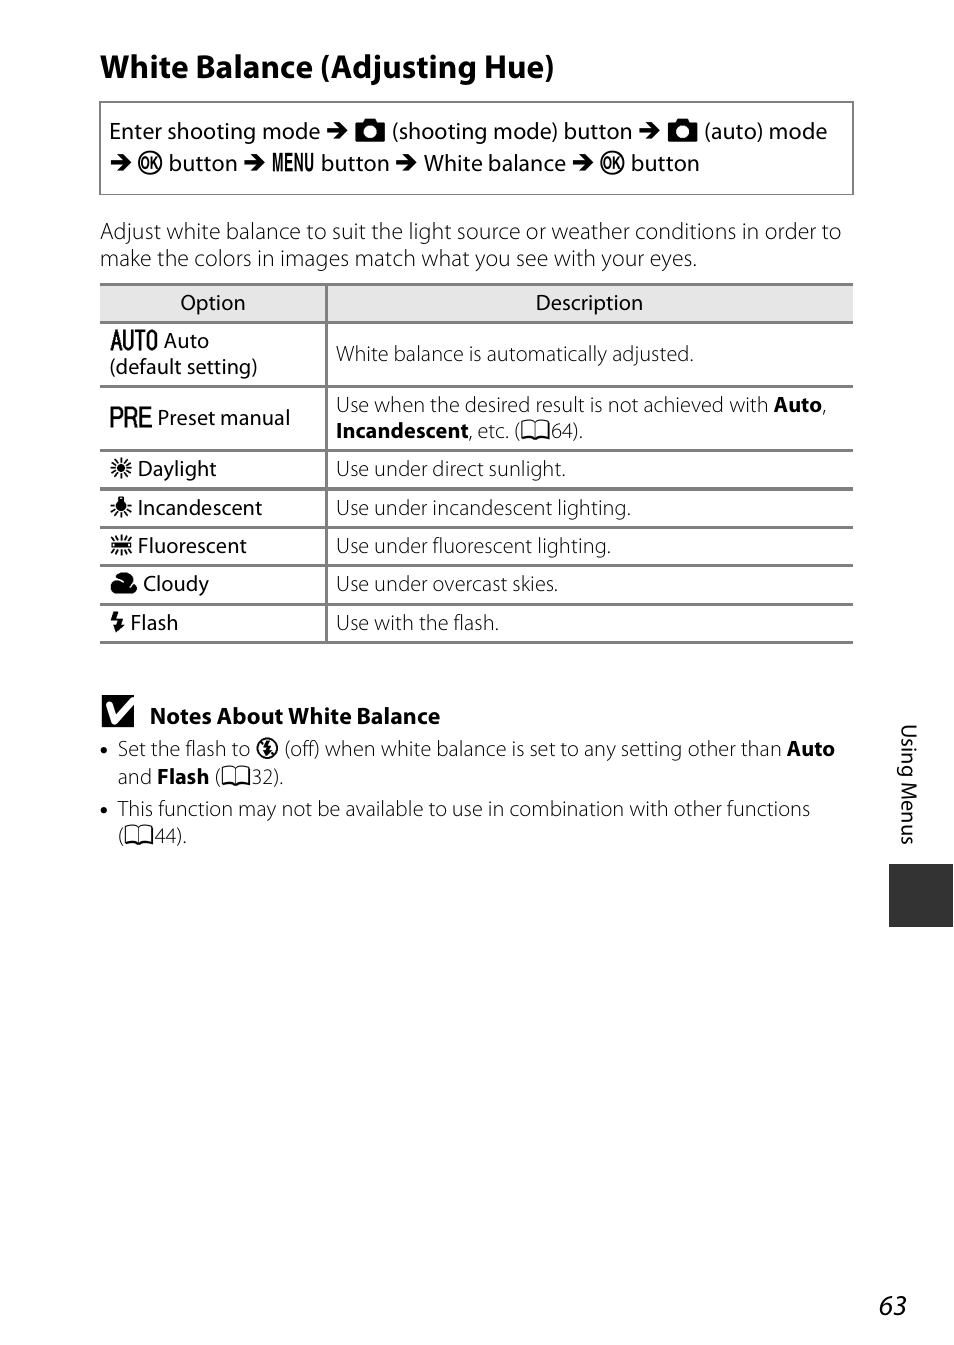 White balance (adjusting hue) | Nikon Coolpix A100 User Manual | Page 79 / 144